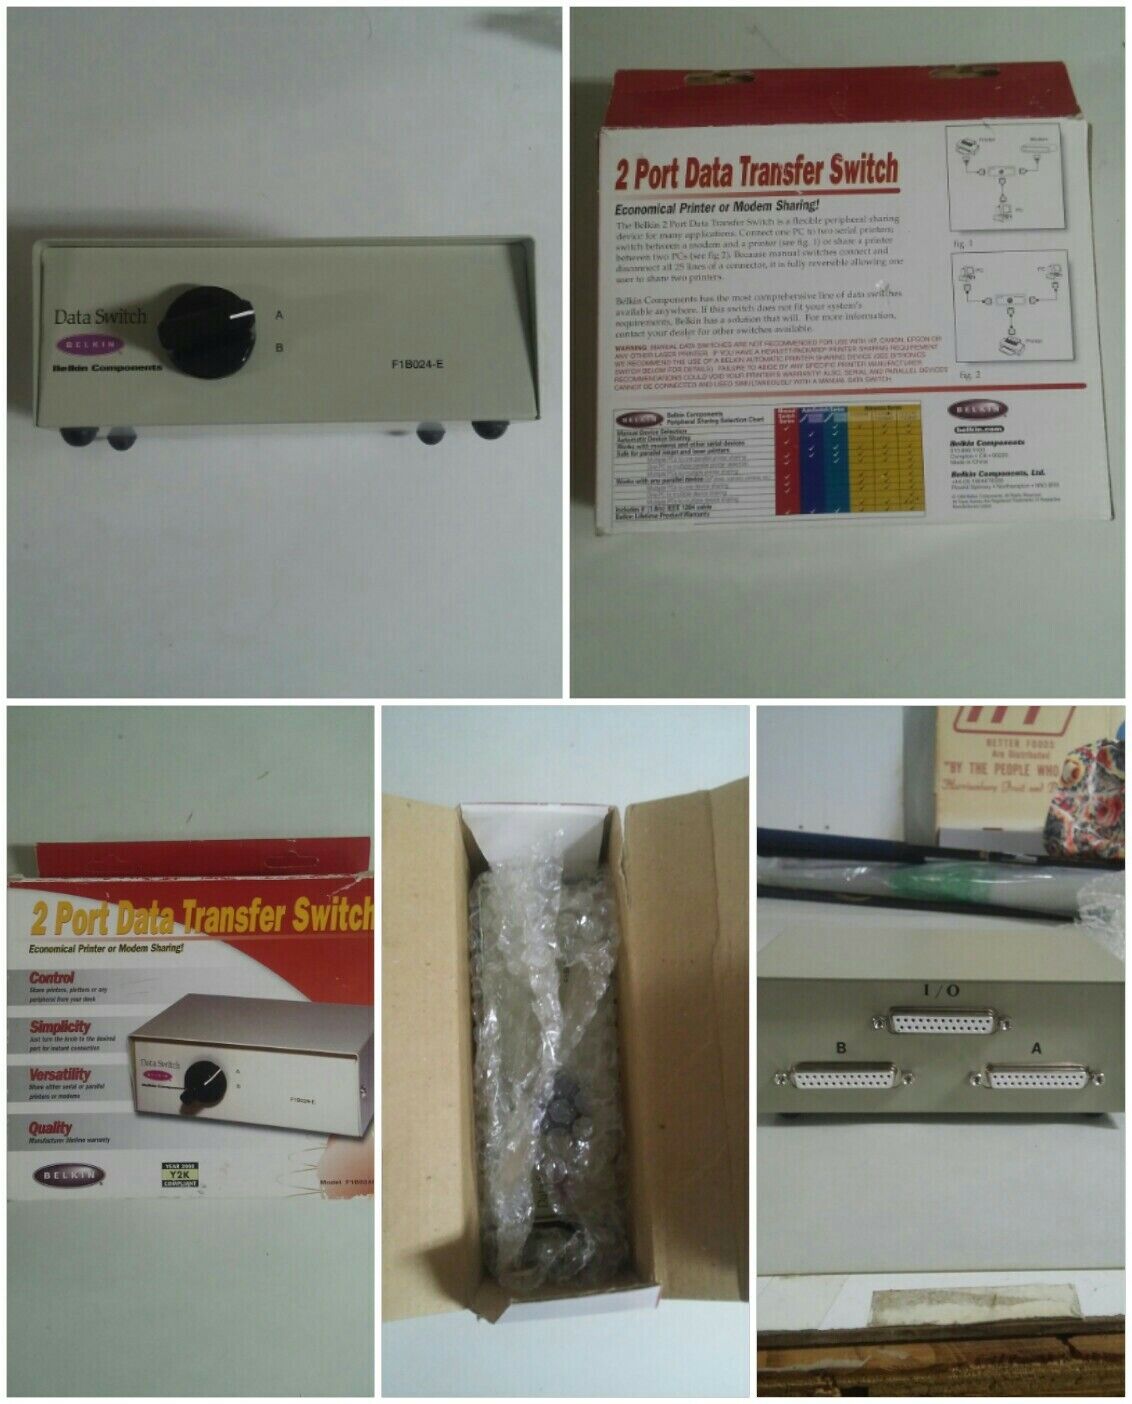 VTG Belkin 2 Port Data Transfer Switch Model F1B024E In Box 